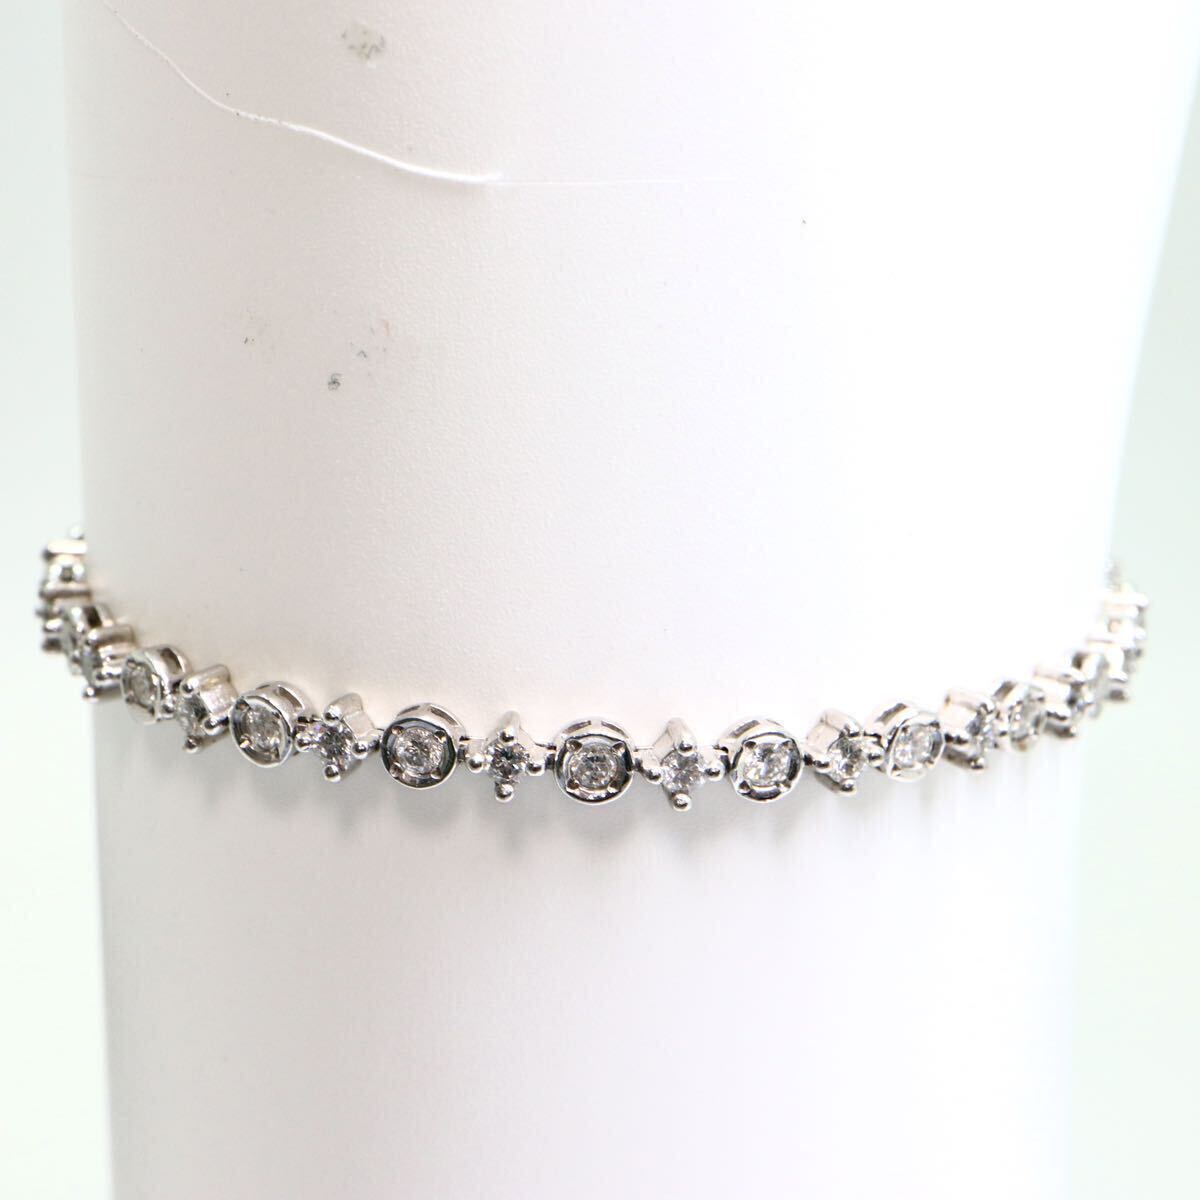 DE BEERS(デビアス)LINE(ライン)1ct UP!!《K18WG 天然ダイヤモンドブレスレット》M 約7.7g 約16cm 1.38ct diamond bracelet EH6/FA1の画像3